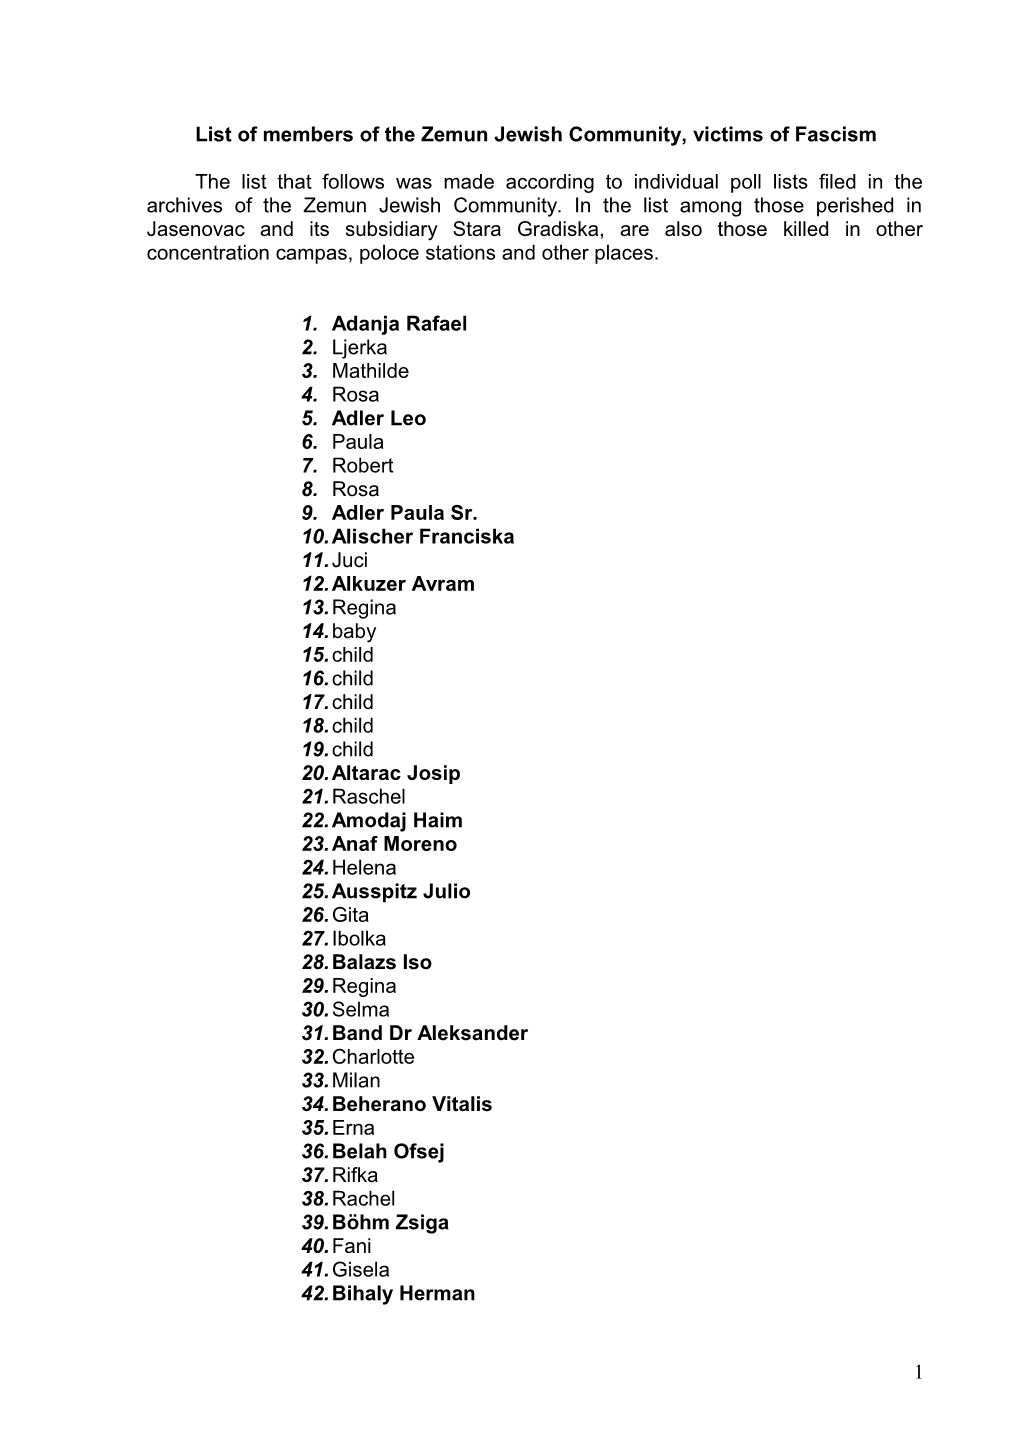 List of Members of the Zemun Jewish Community, Victims of Fascism